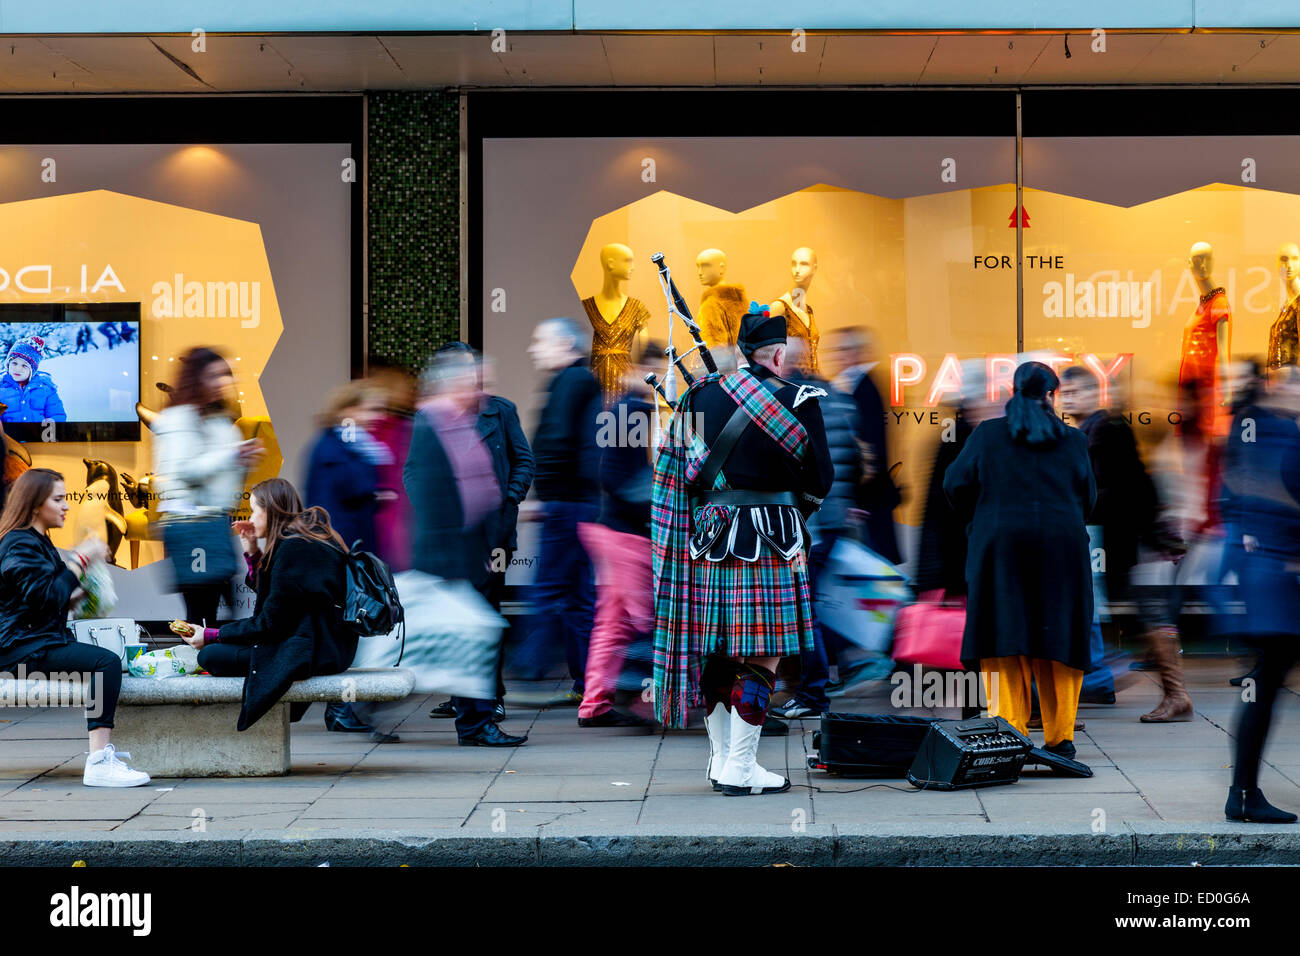 Oxford Street At Christmas Time, London, England Stock Photo